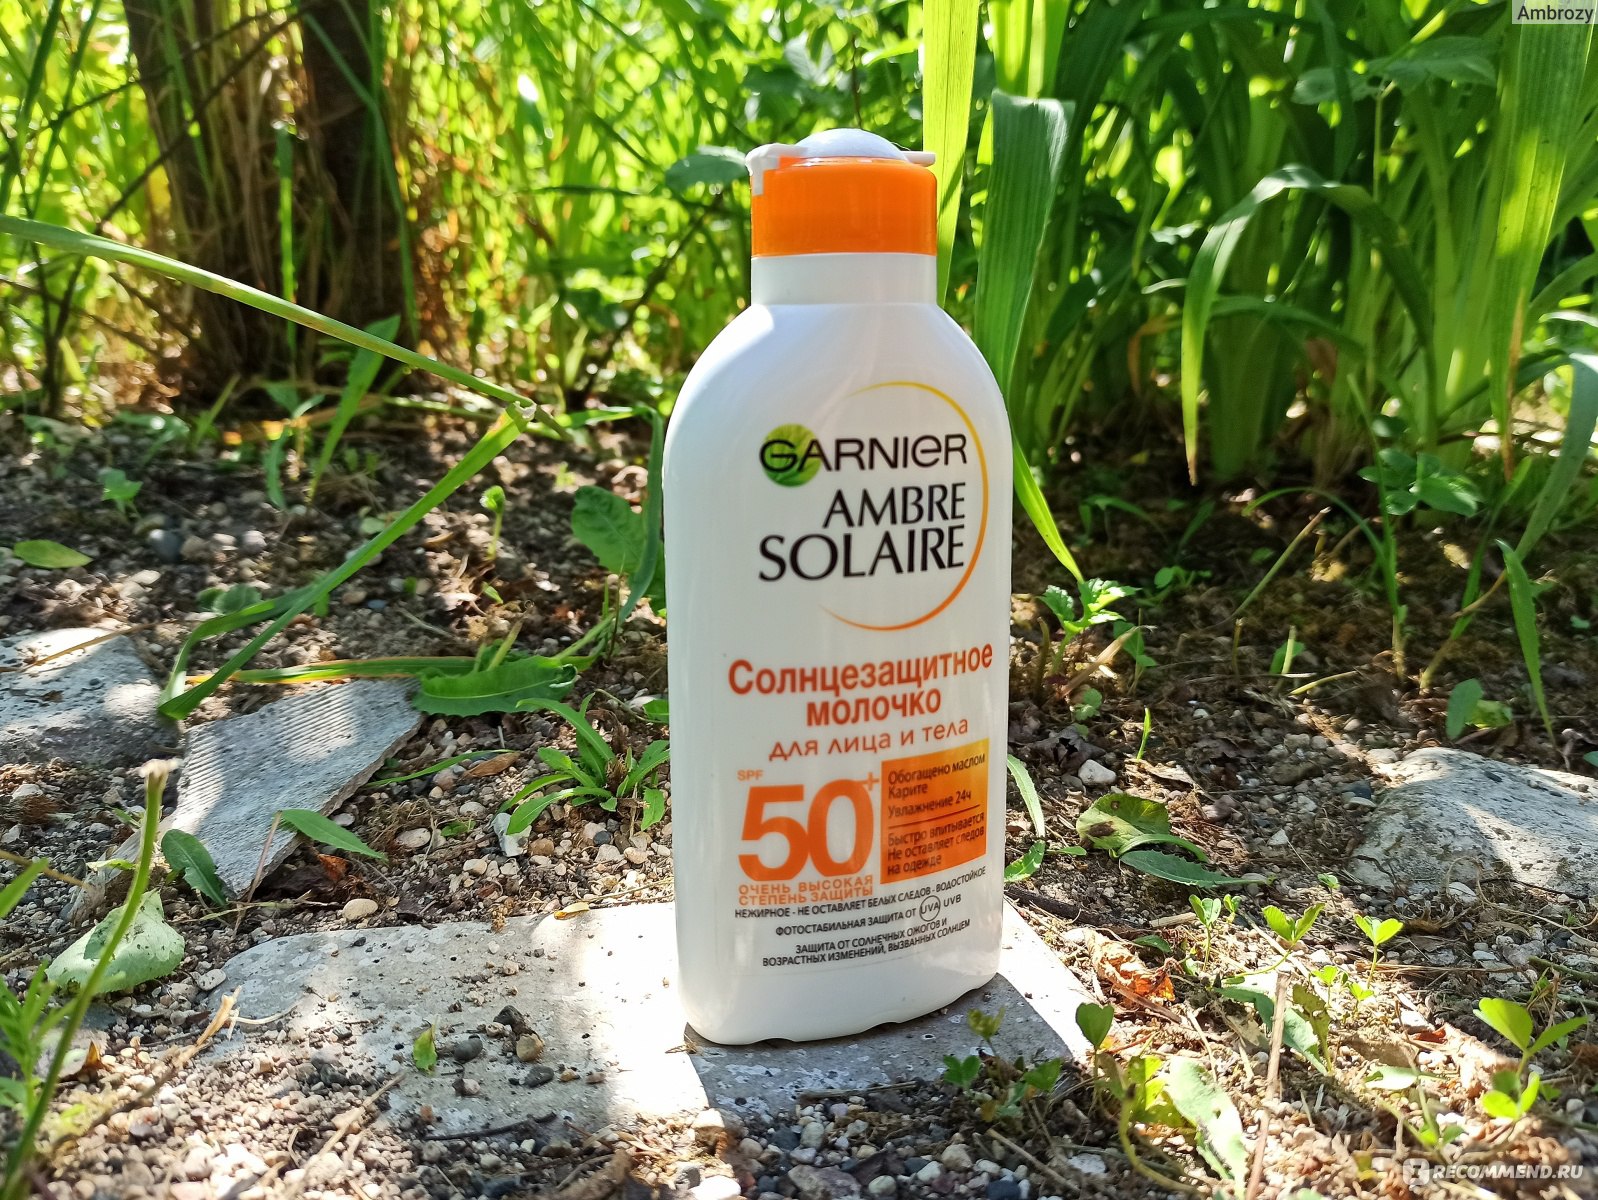 Солнцезащитное молочко Garnier Ambre Solaire для лица и тела SPF 50+ фото